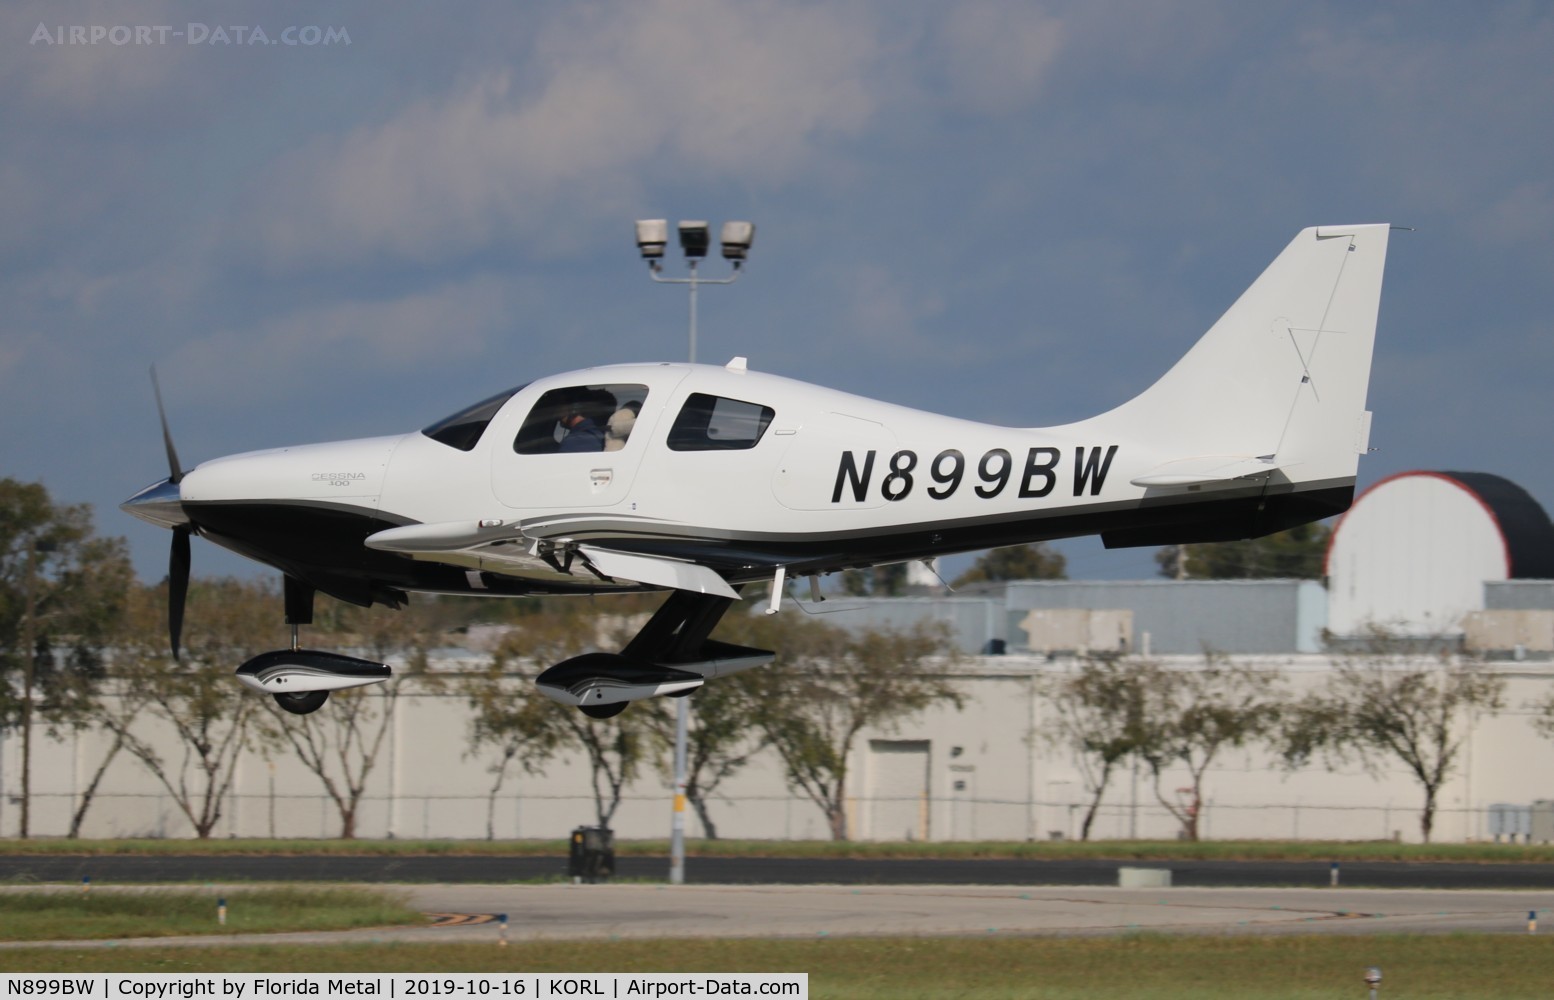 N899BW, 2006 Columbia Aircraft Mfg LC41-550FG C/N 41601, ORL spotting 2019